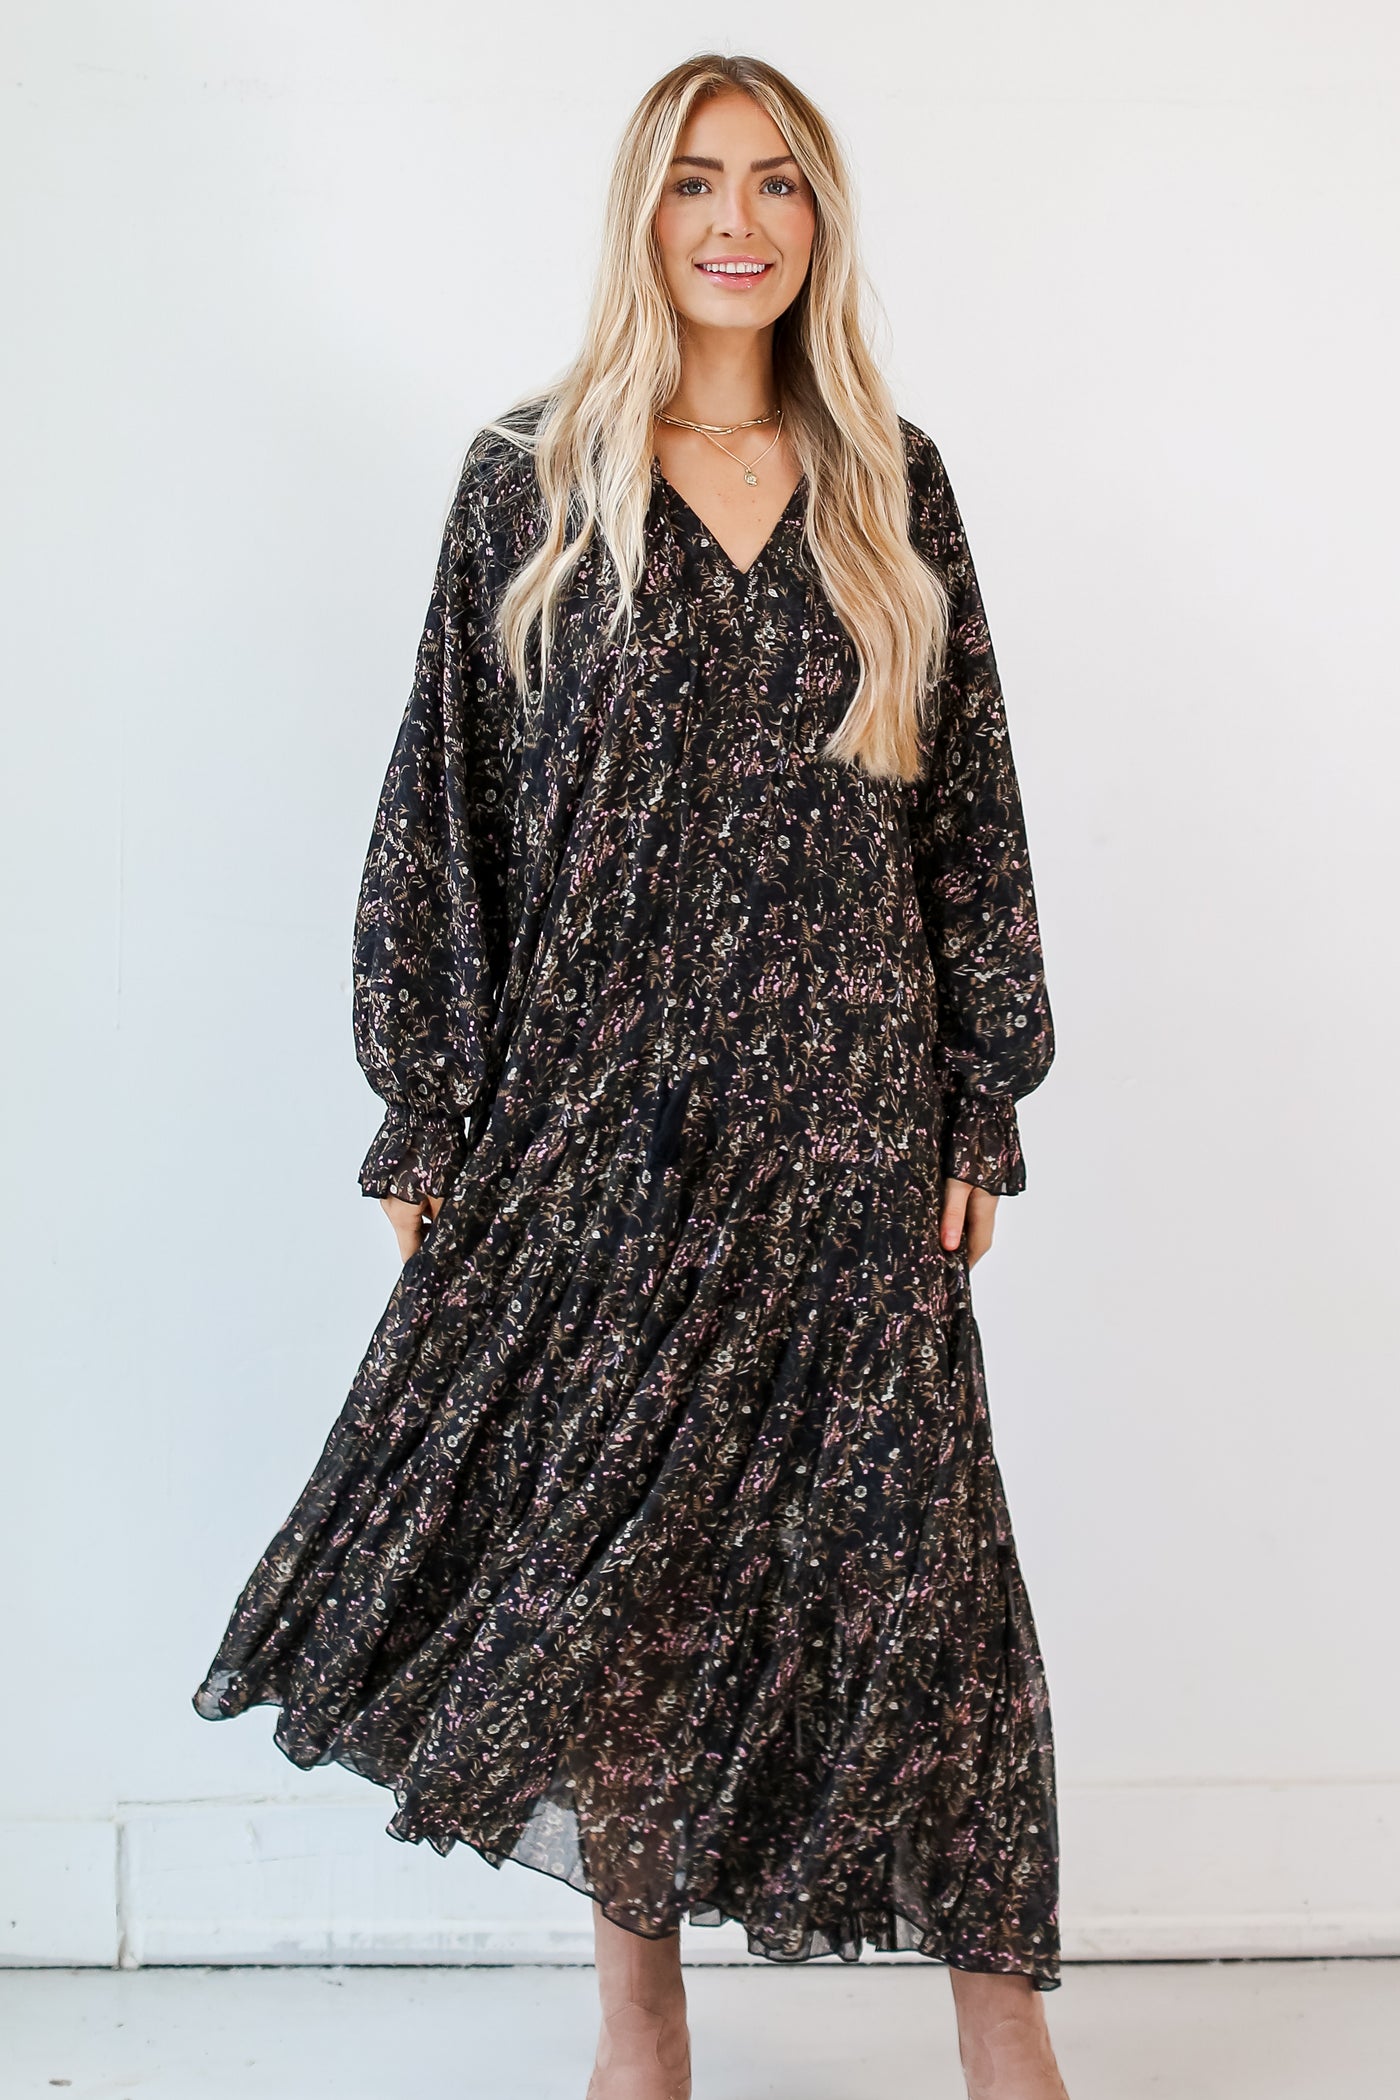 model wearing a Black Floral Maxi Dress